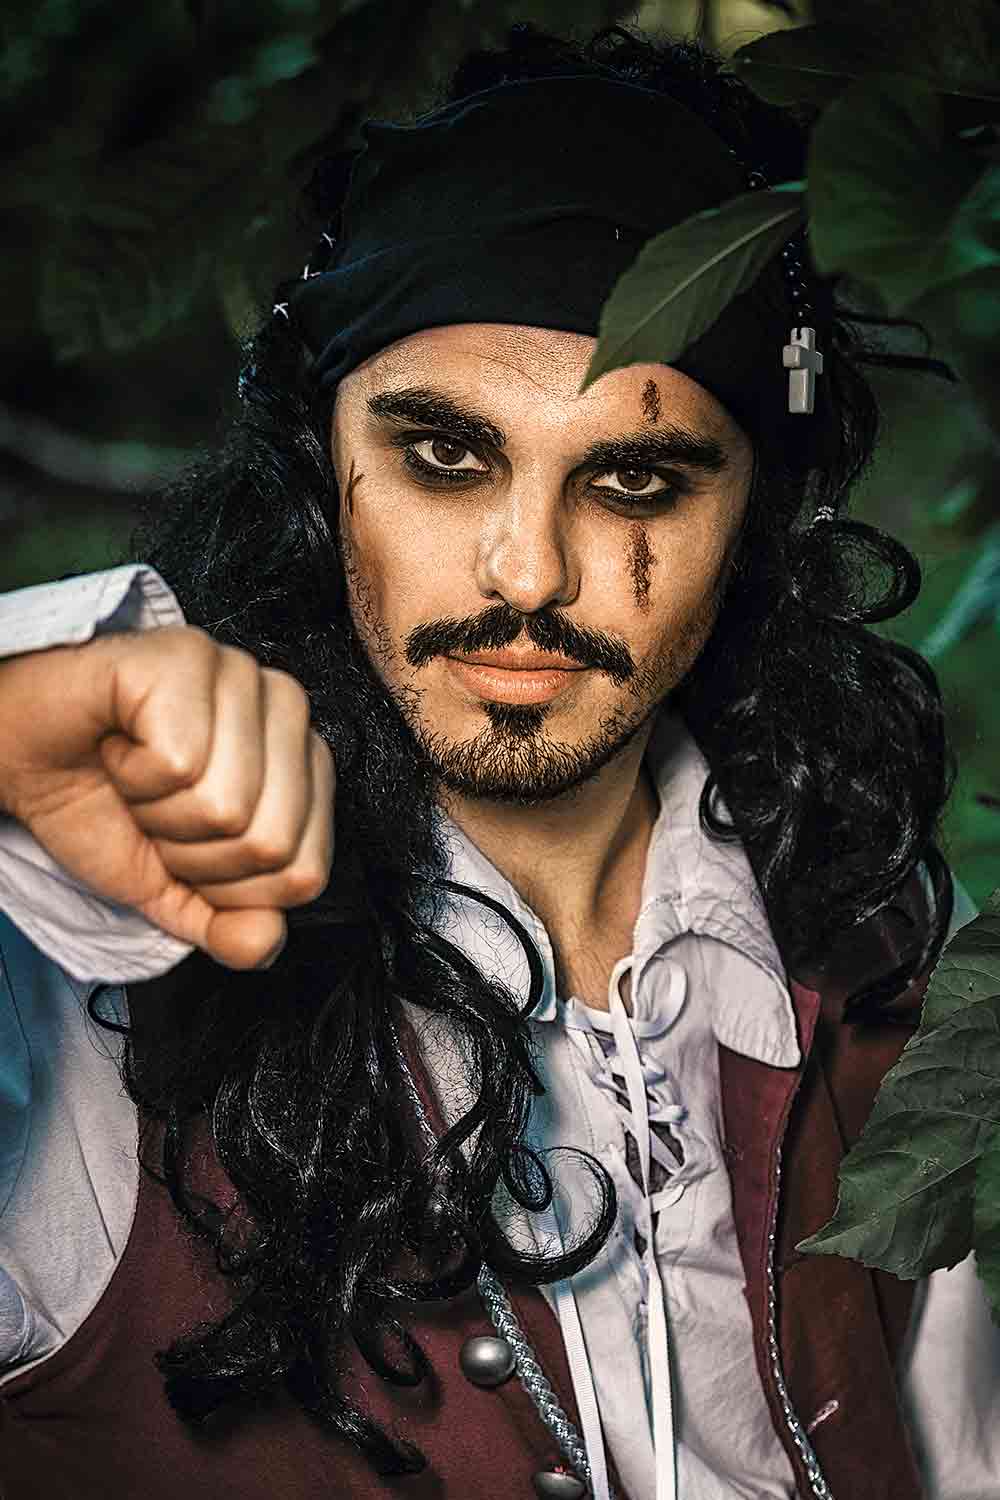 Captain Jack Sparrow #halloweenmakeup #halloweenmakeupmen #mensfacepaint #menshalloweenmakeup #halloweenmakeupformen